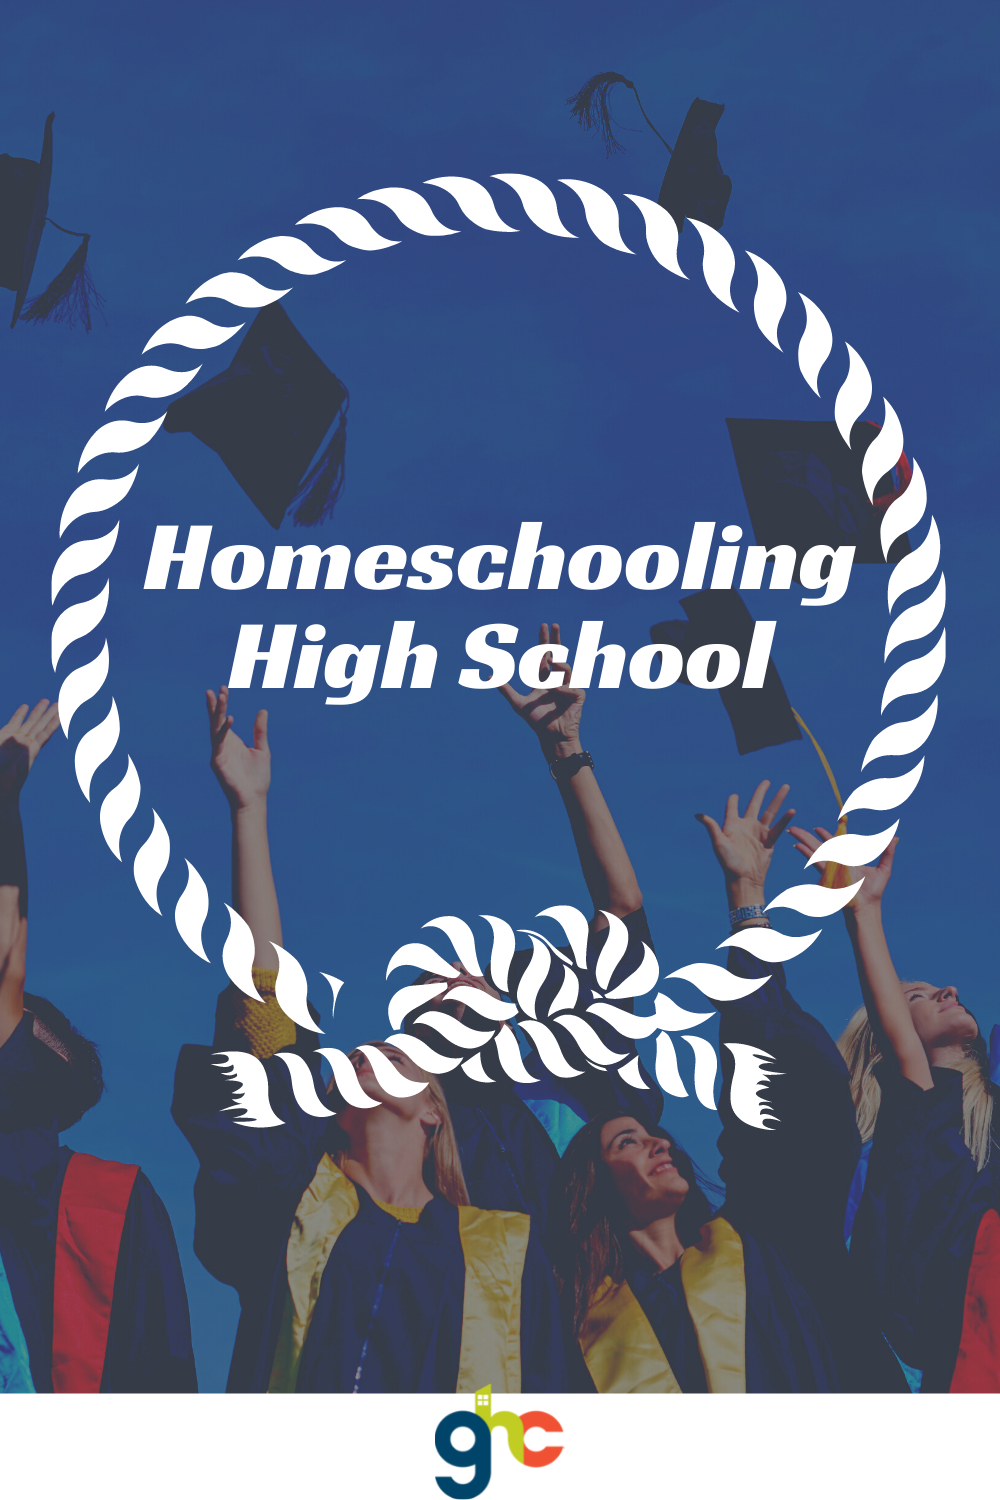 Homeschooling High School - pin